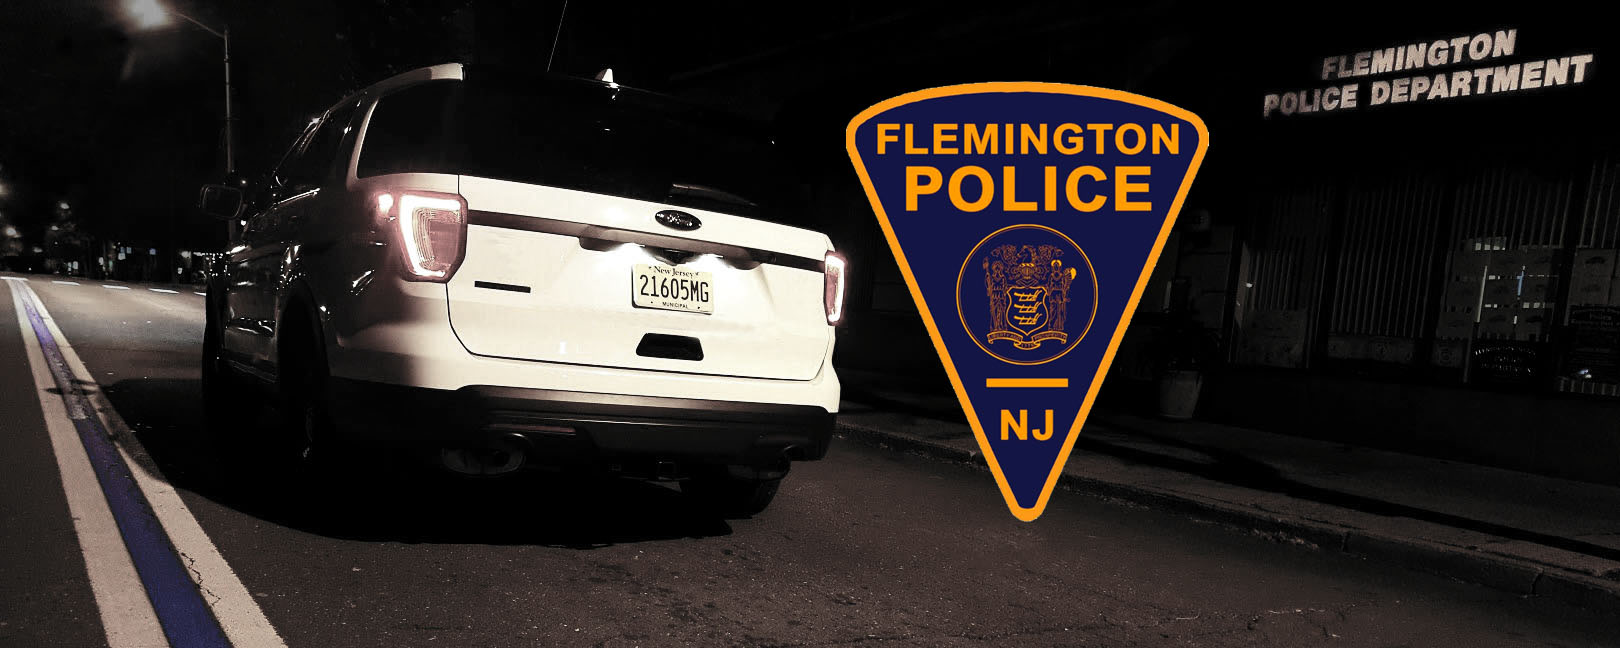 Flemington Police Department, NJ Police Jobs